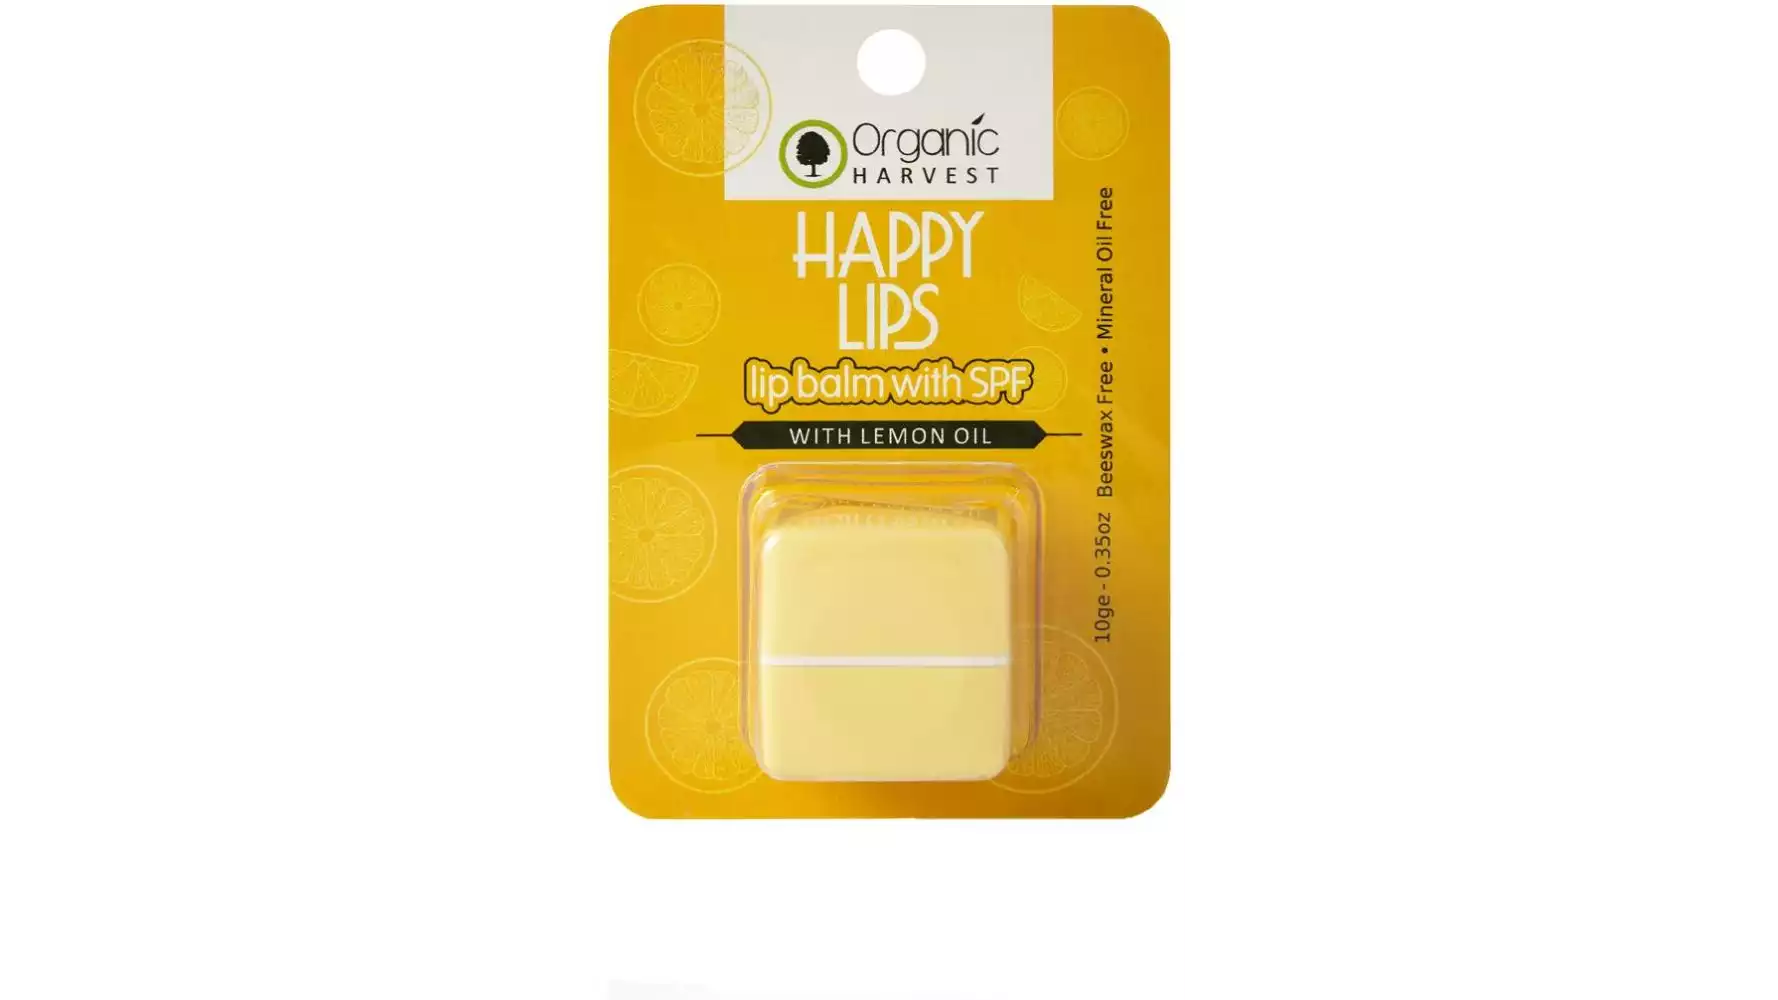 Organic Harvest Happy Lips Lip Balm With SPF (10g)